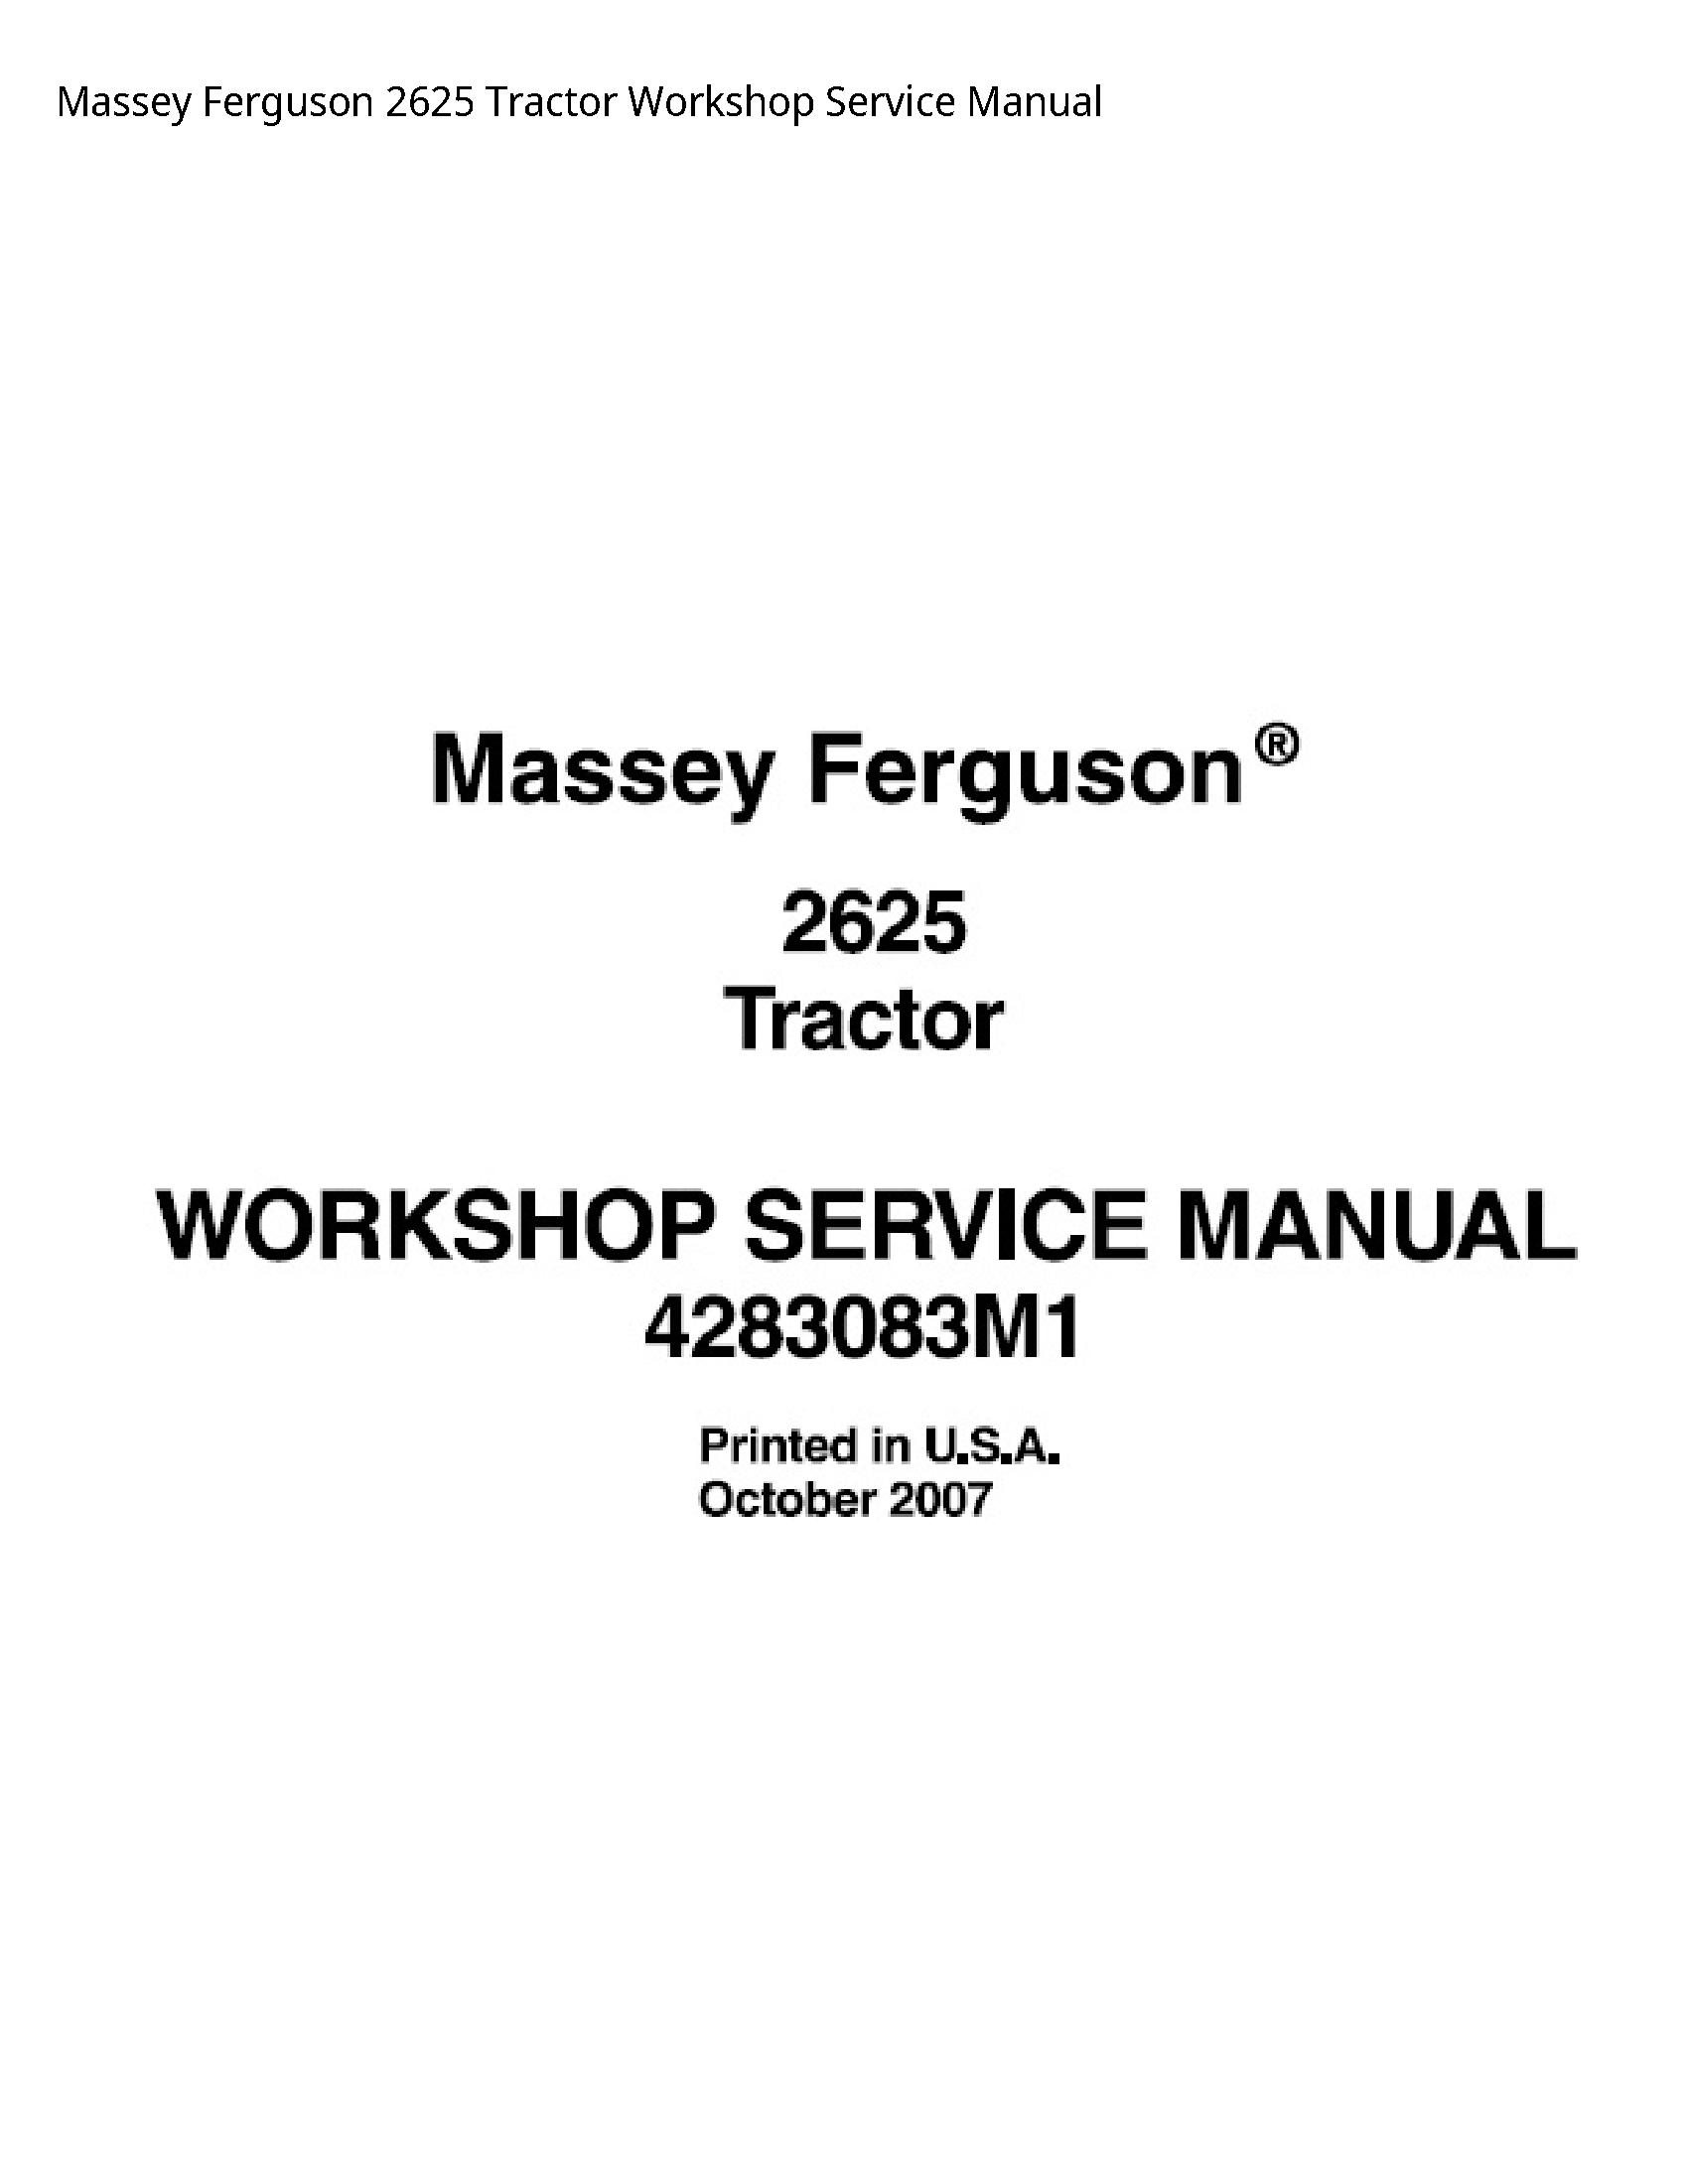 Massey Ferguson 2625 Tractor Service manual